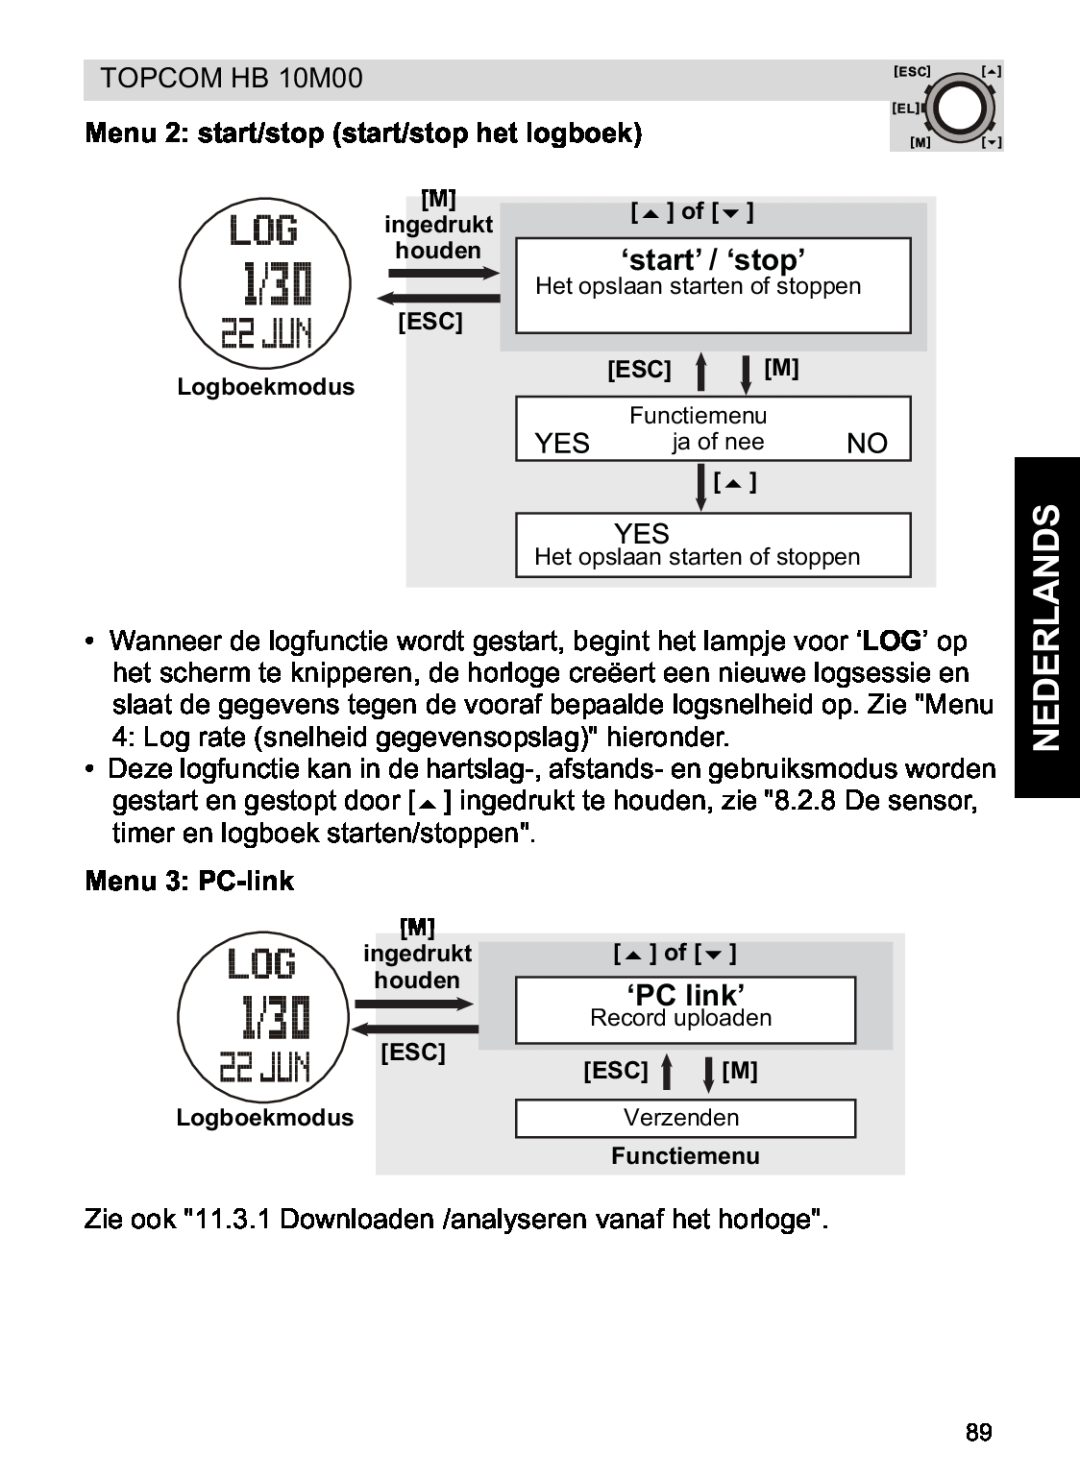 Topcom HB 10M00 manual Menu 2 start/stop start/stop het logboek, Menu 3 PC-link, Nederlands, ‘start’ / ‘stop’, ‘PC link’ 